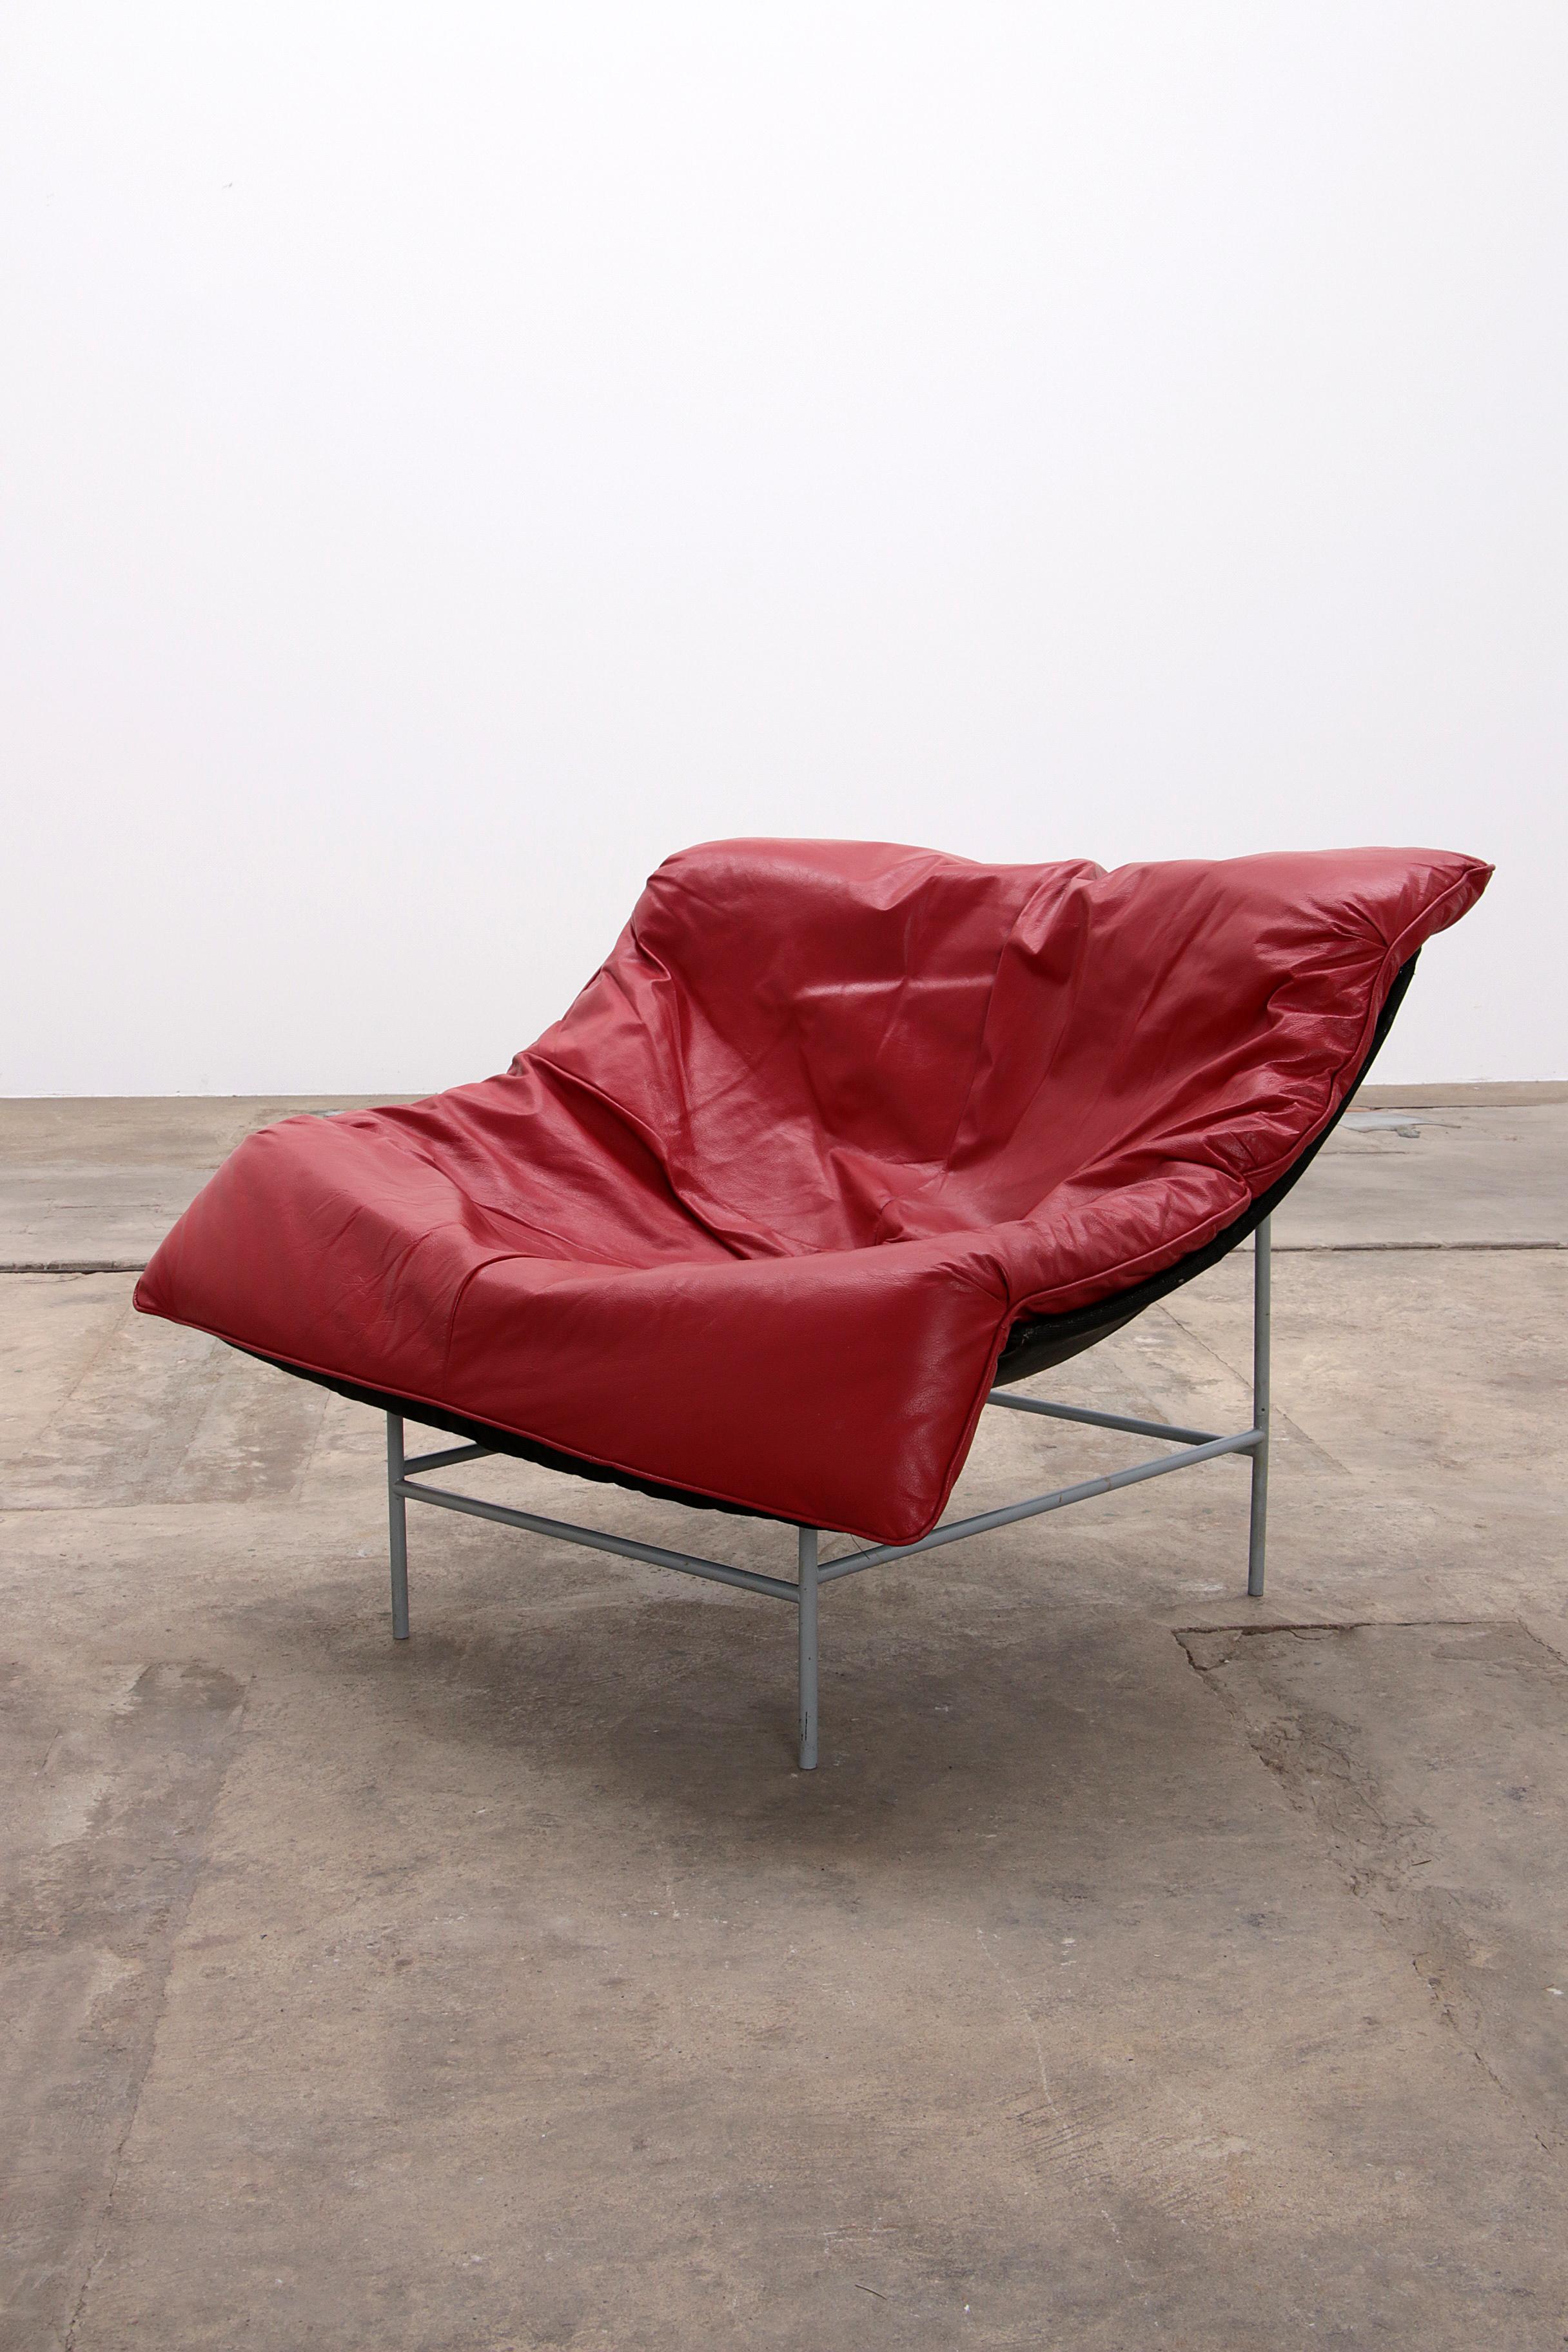 Metal Gerard van den Berg butterfly chair for Montis, 1980 red